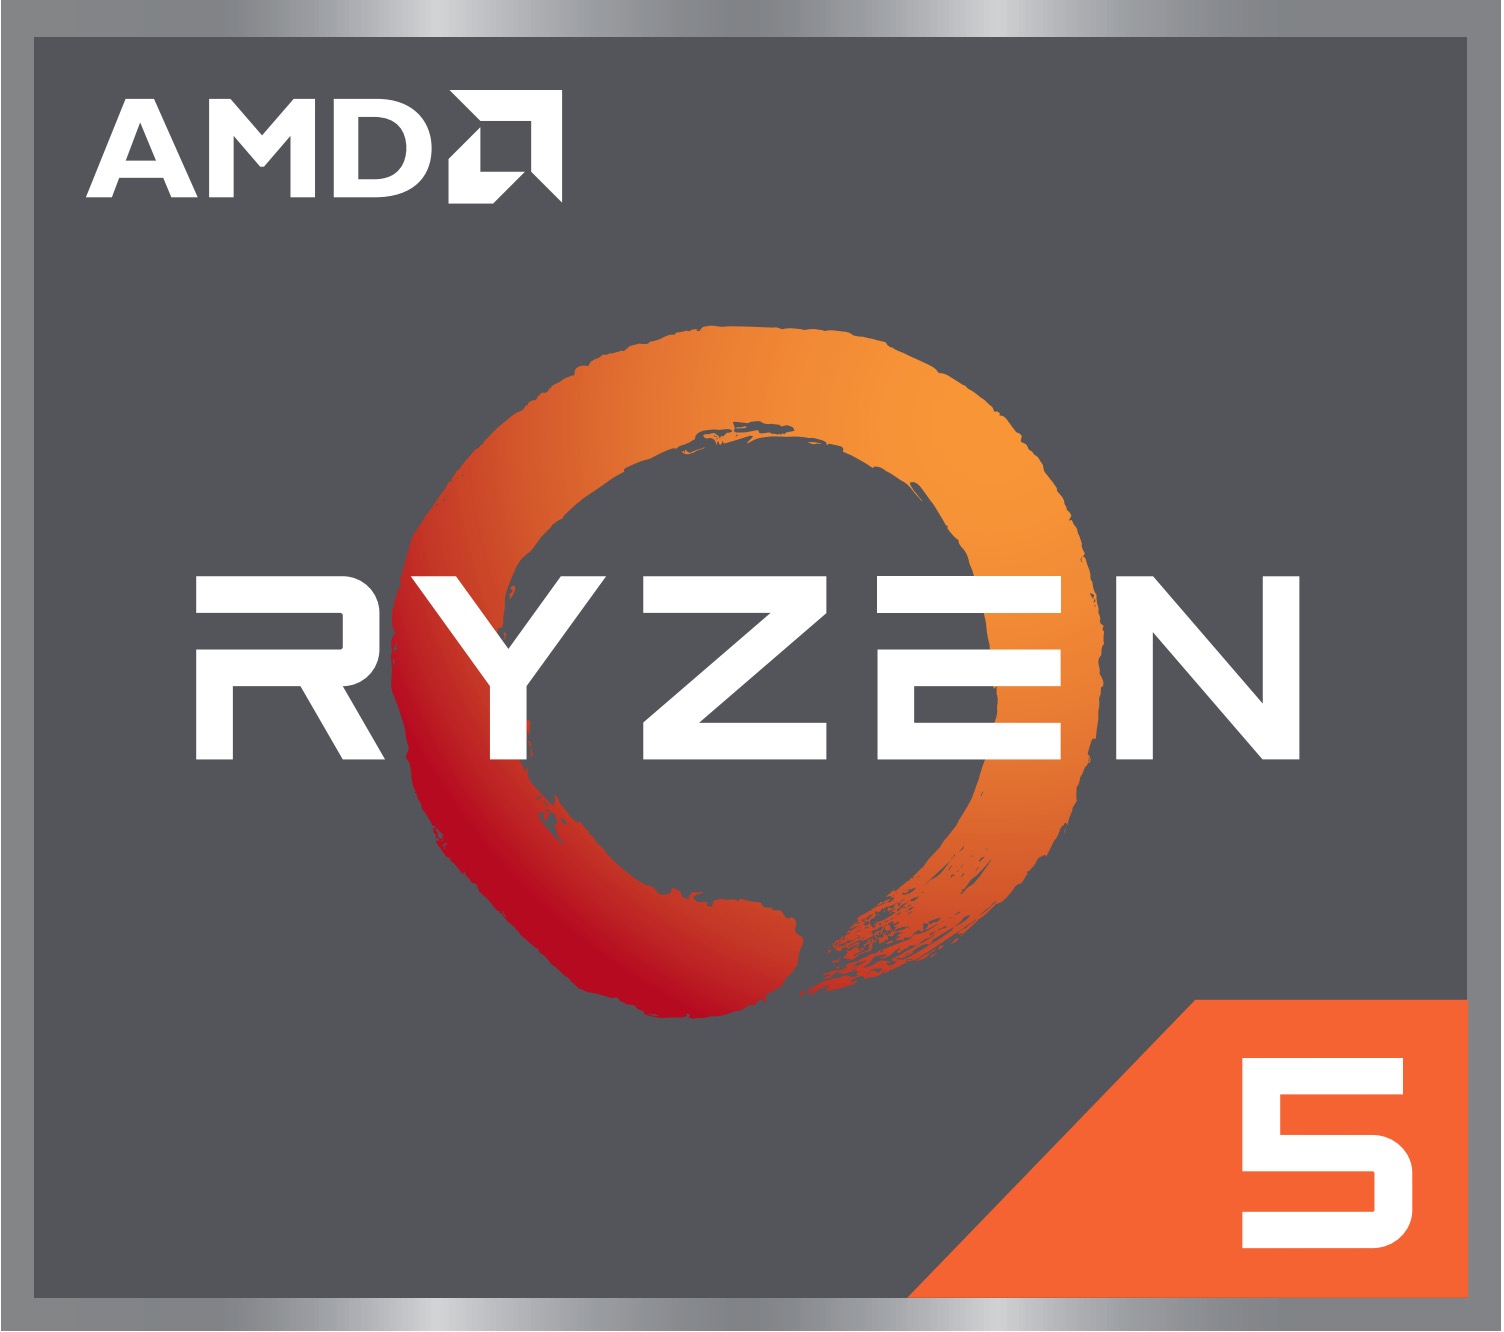 Impasse stilte Verbaasd AMD Ryzen 5 3500U Processor - NotebookCheck.net Tech